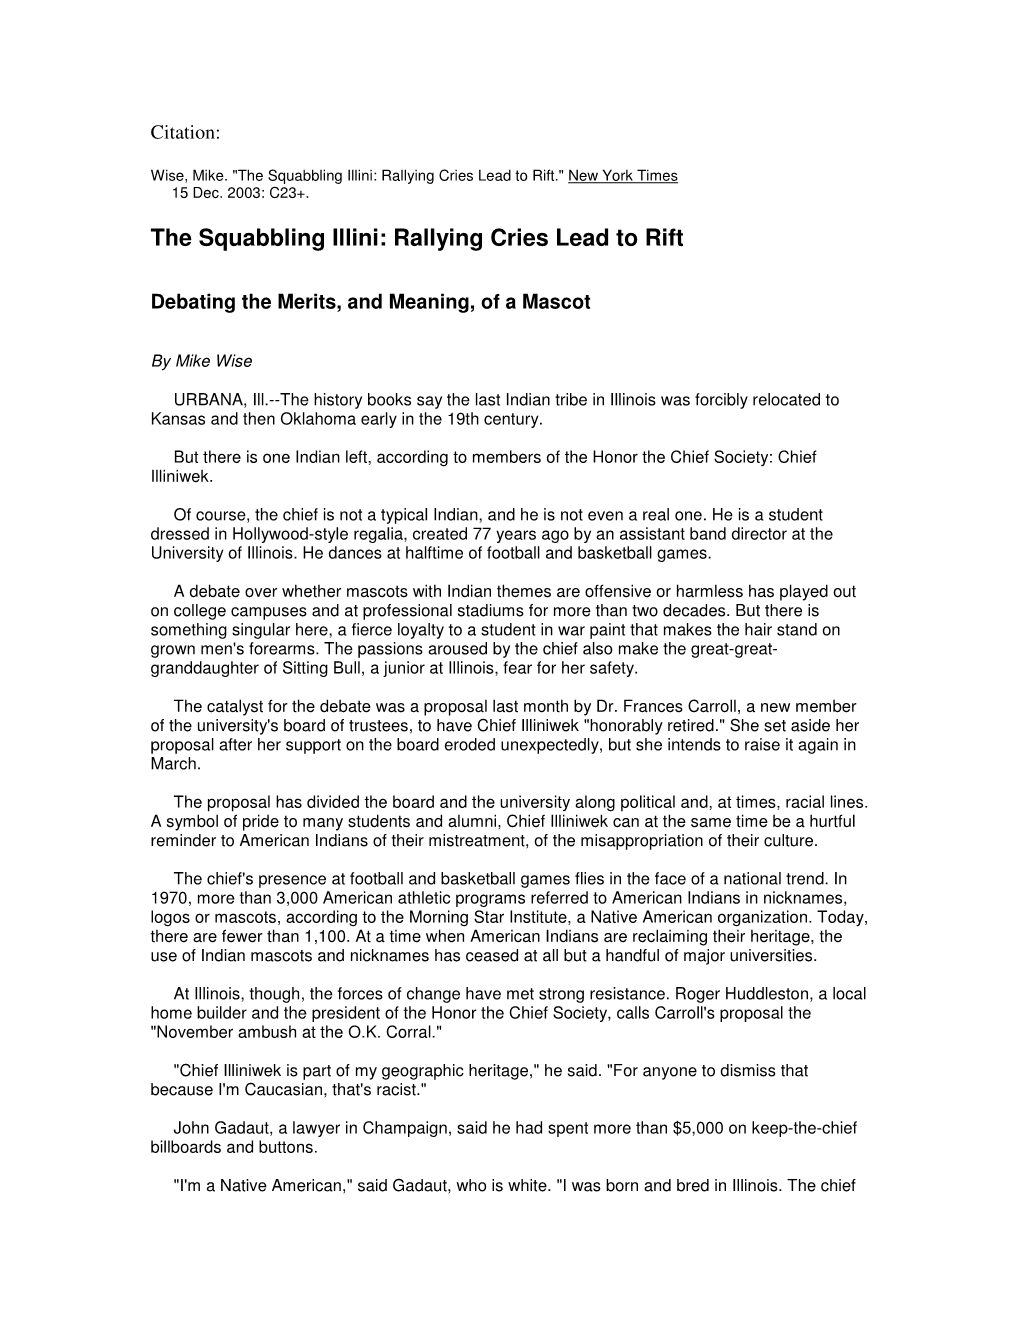 The Squabbling Illini: Rallying Cries Lead to Rift." New York Times 15 Dec